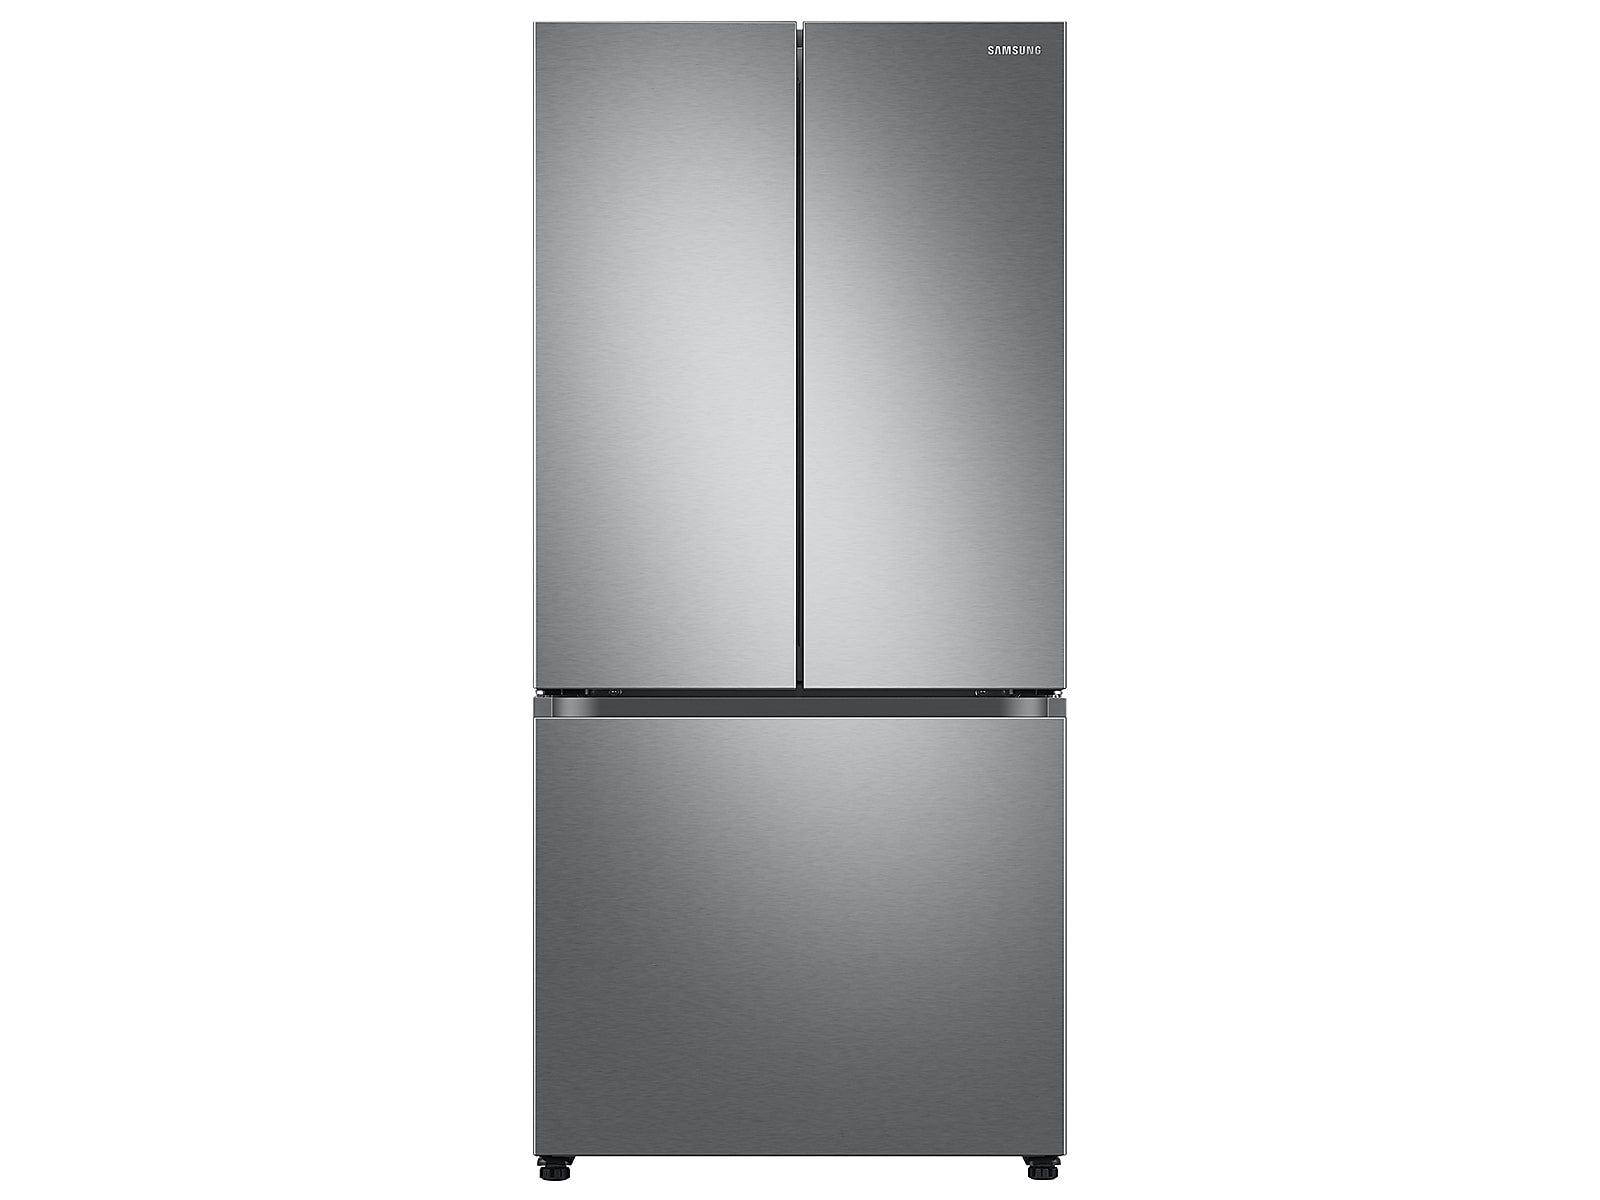 Samsung 25 cu. ft. 33" 3-Door French Door Refrigerator with Dual Auto Ice Maker in Stainless Steel(RF25C5151SR/AA)